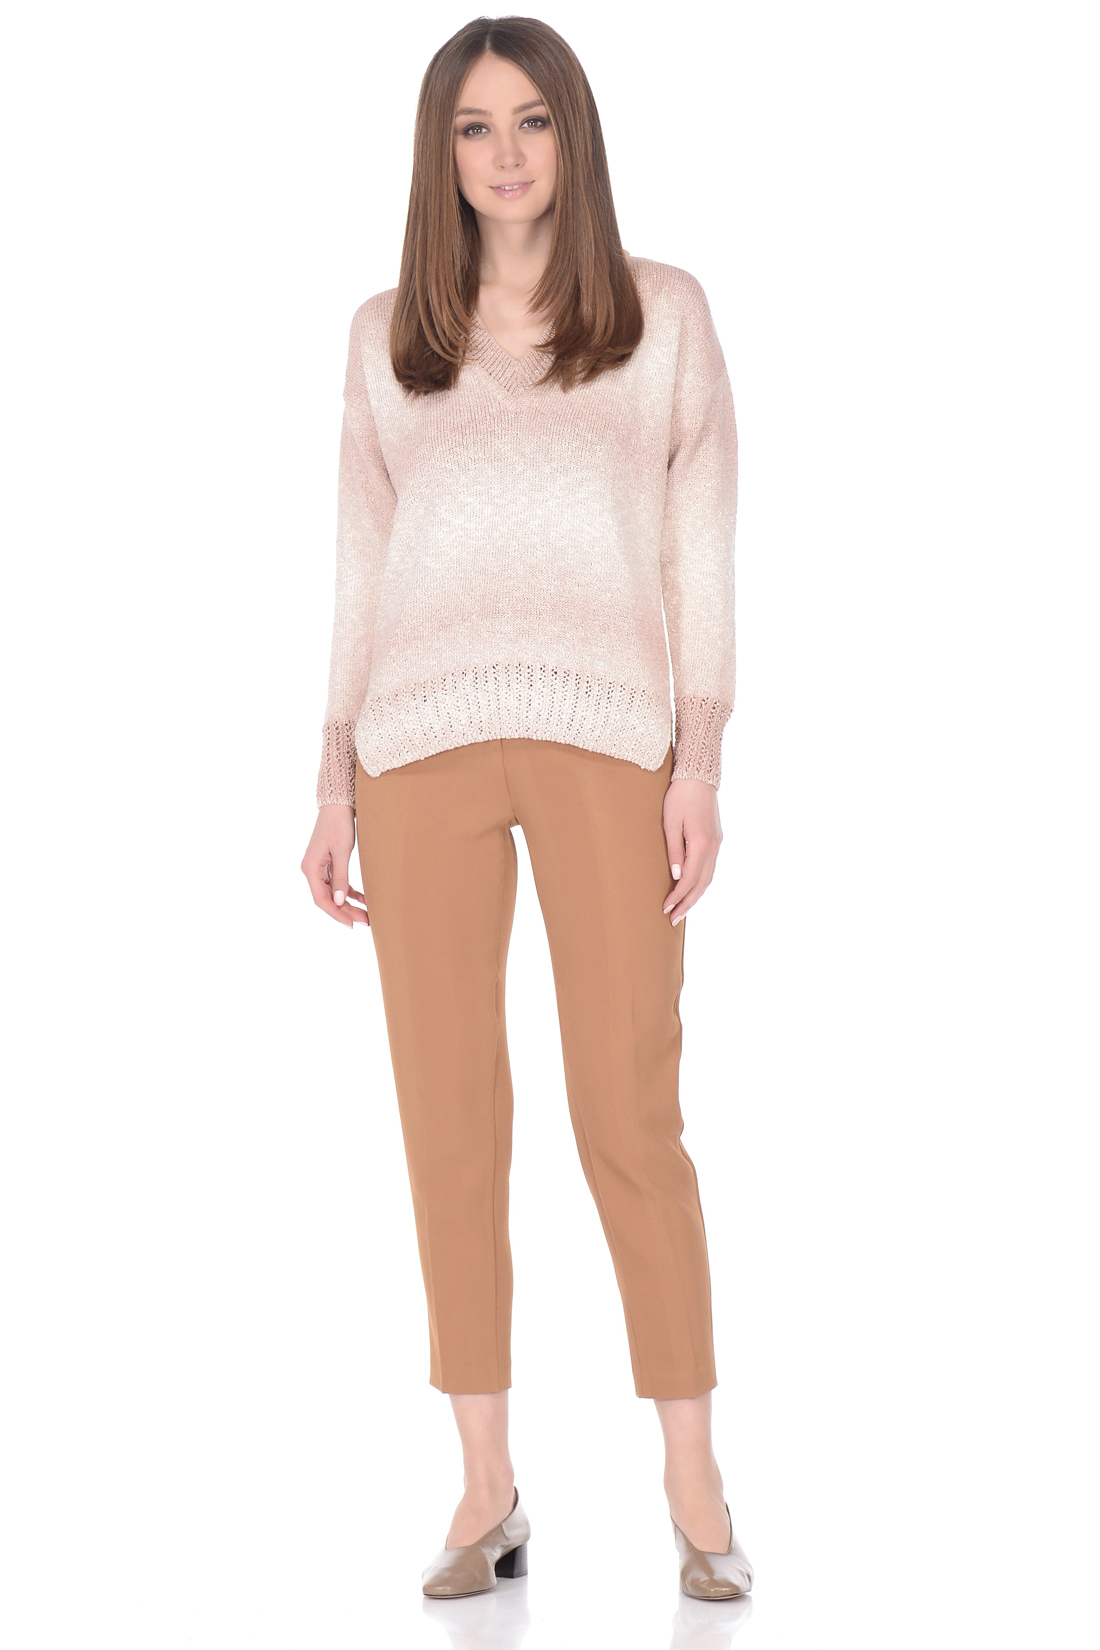 Пуловер с градиентом (арт. baon B138014), размер XXL, цвет розовый Пуловер с градиентом (арт. baon B138014) - фото 4